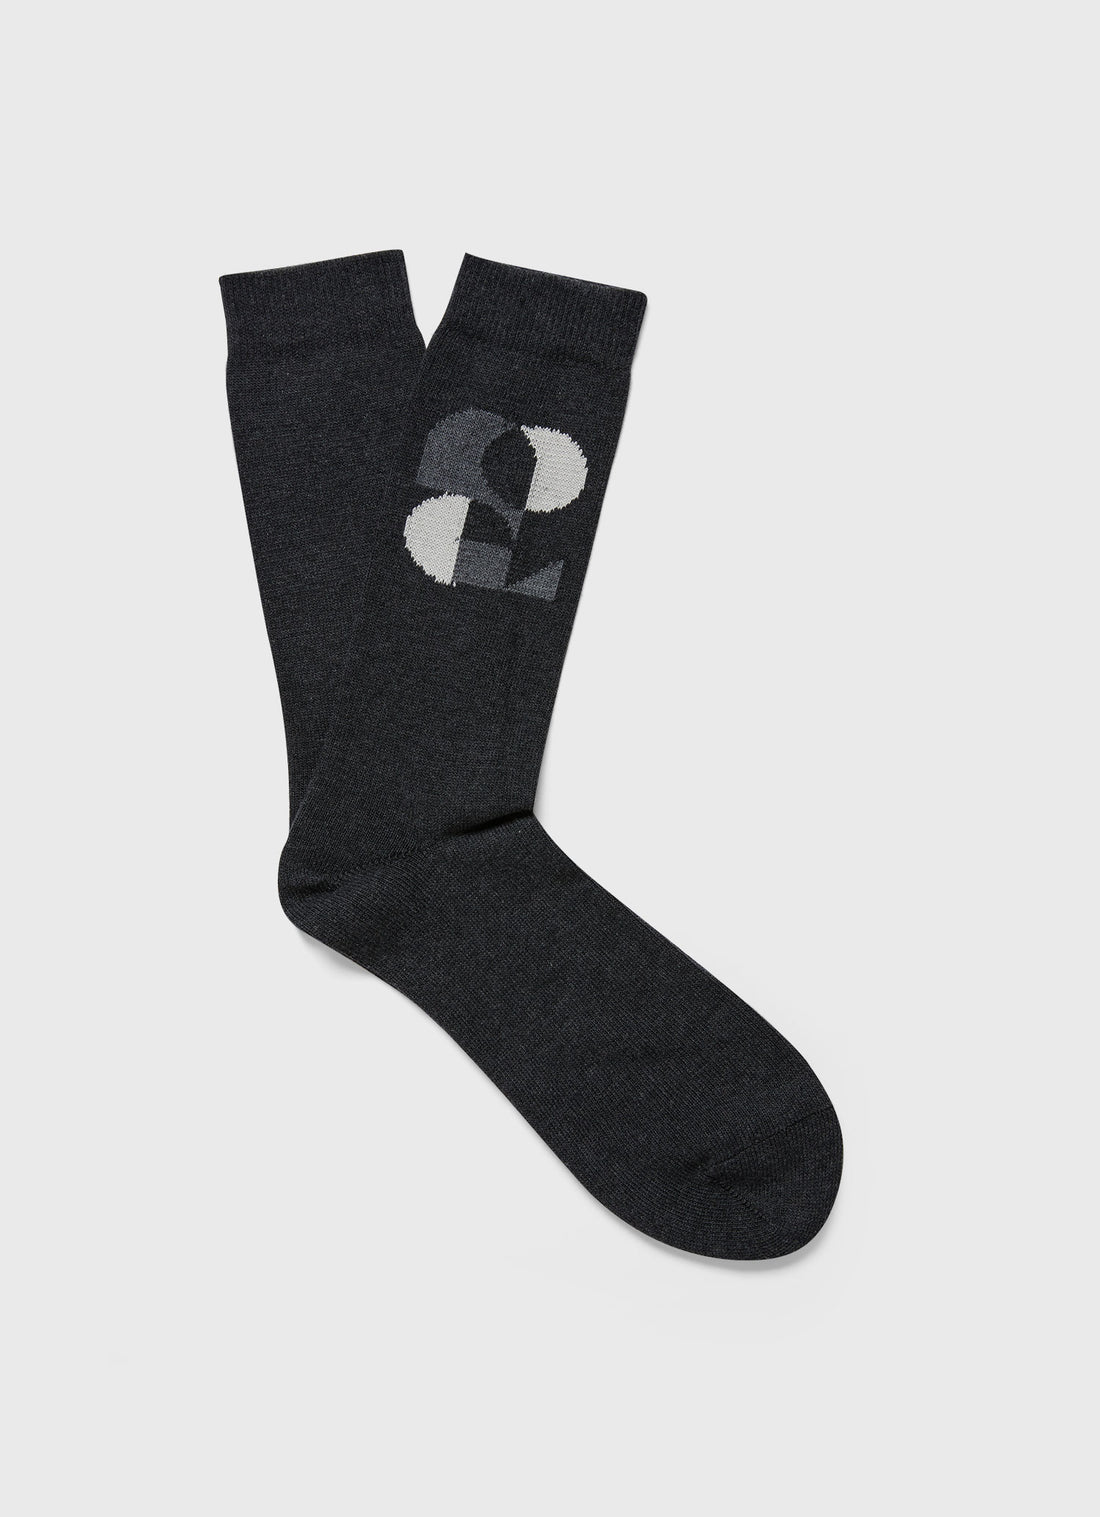 Men's Craig Ward Jacquard Socks in Charcoal Melange